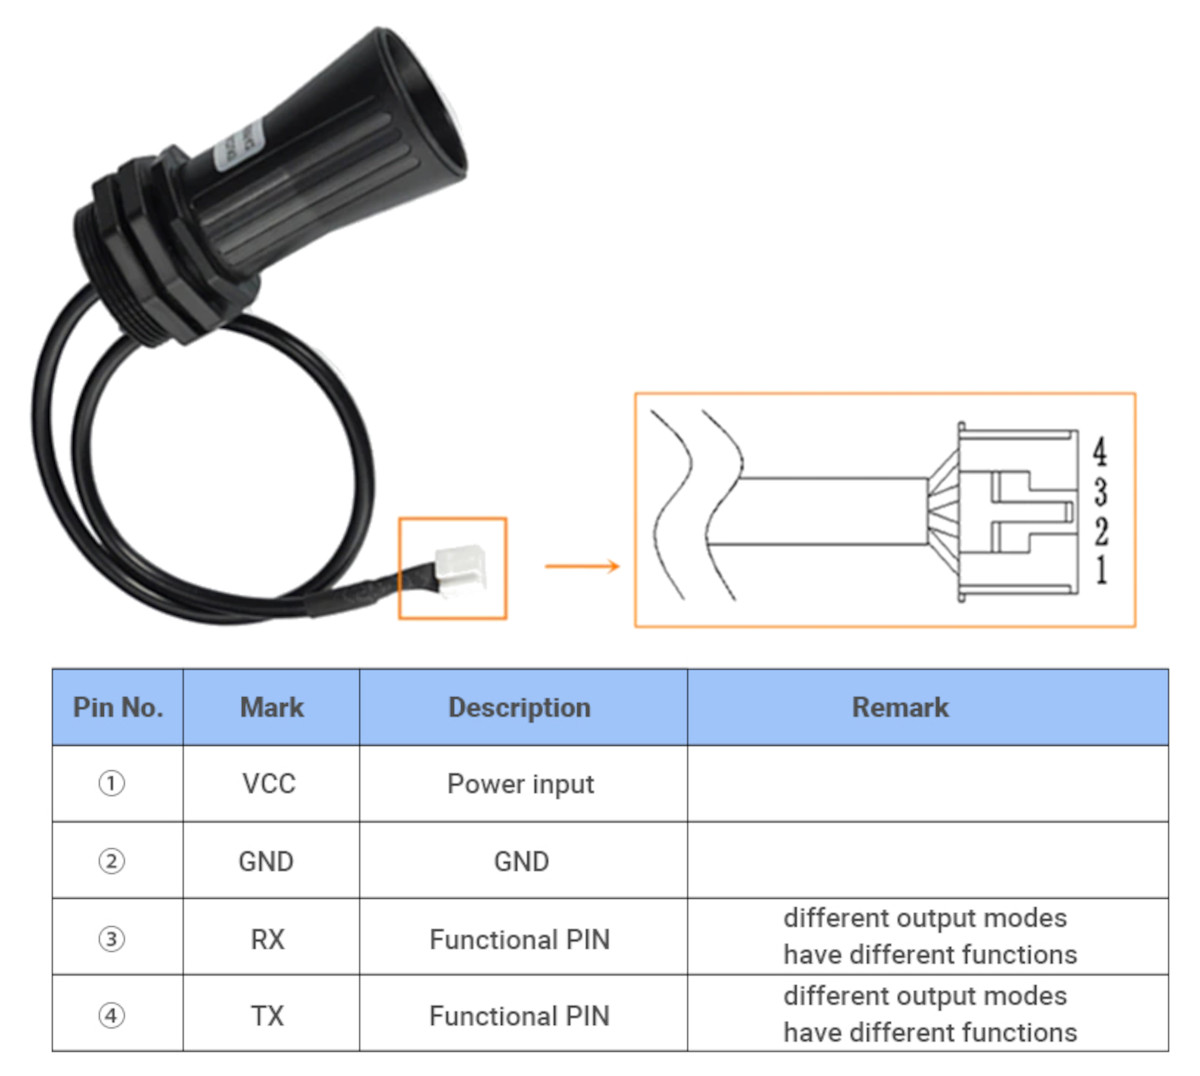 PB-A01 Ultrasonic Distance Sensor Wiring Interface